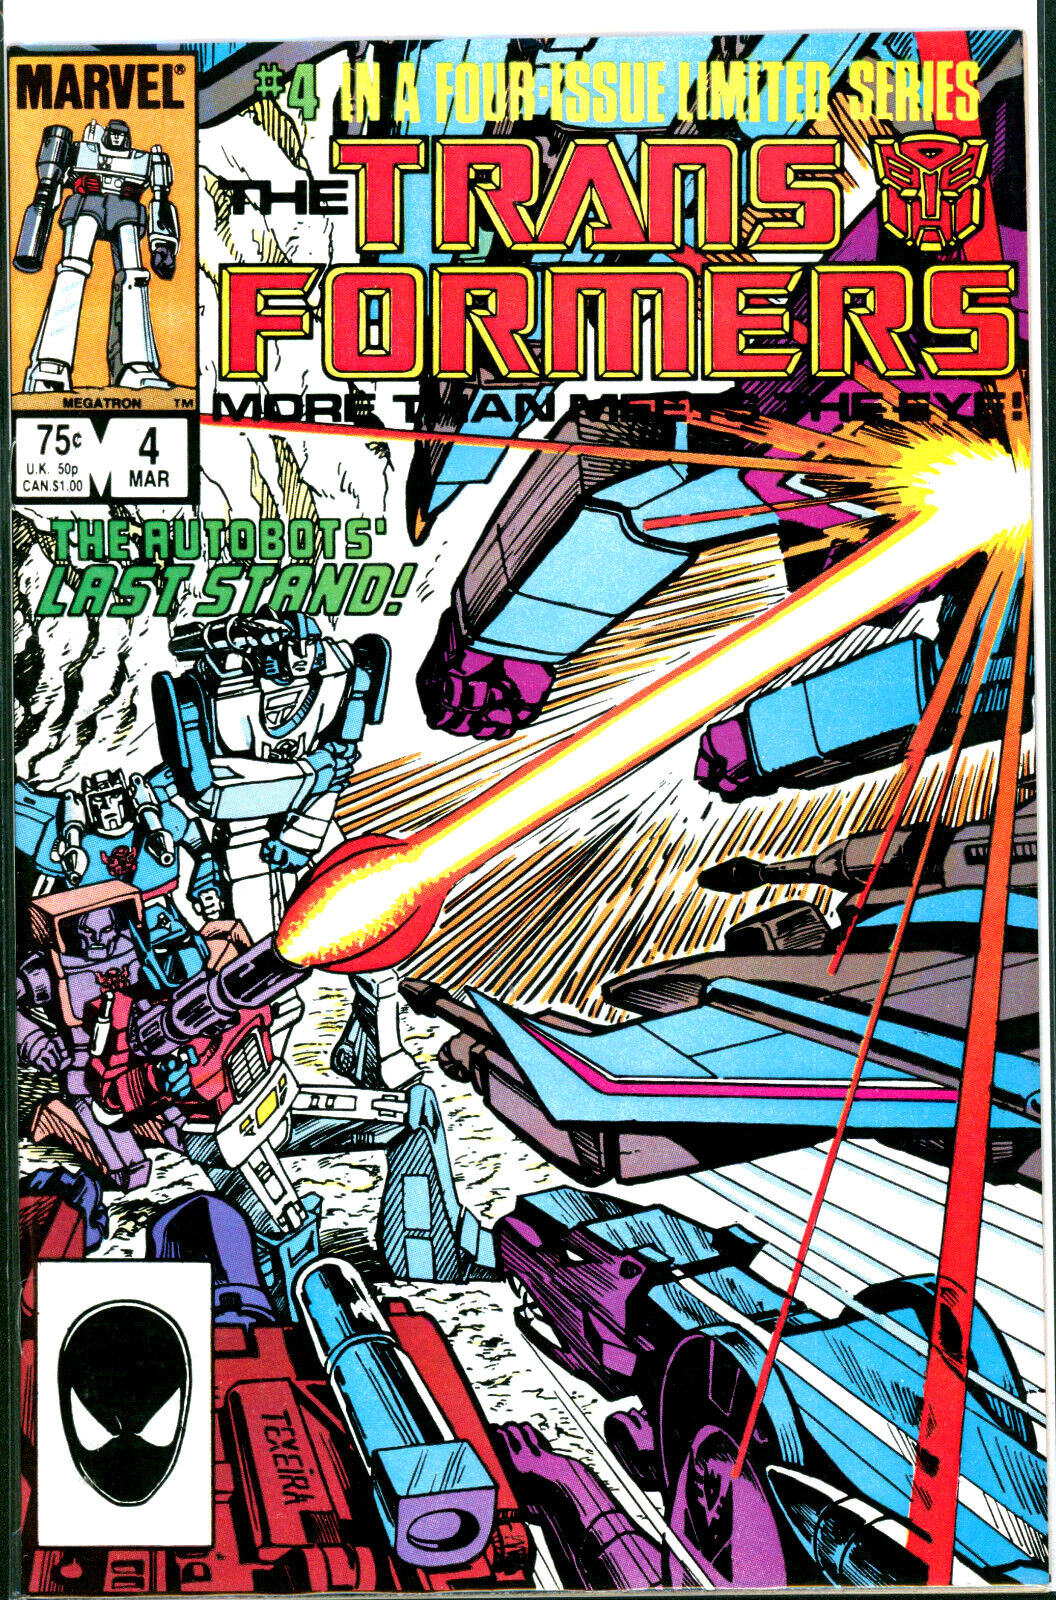 Transformers #4 Marvel Comics 1984 VF 1st Shockwave Dinobots Cameo